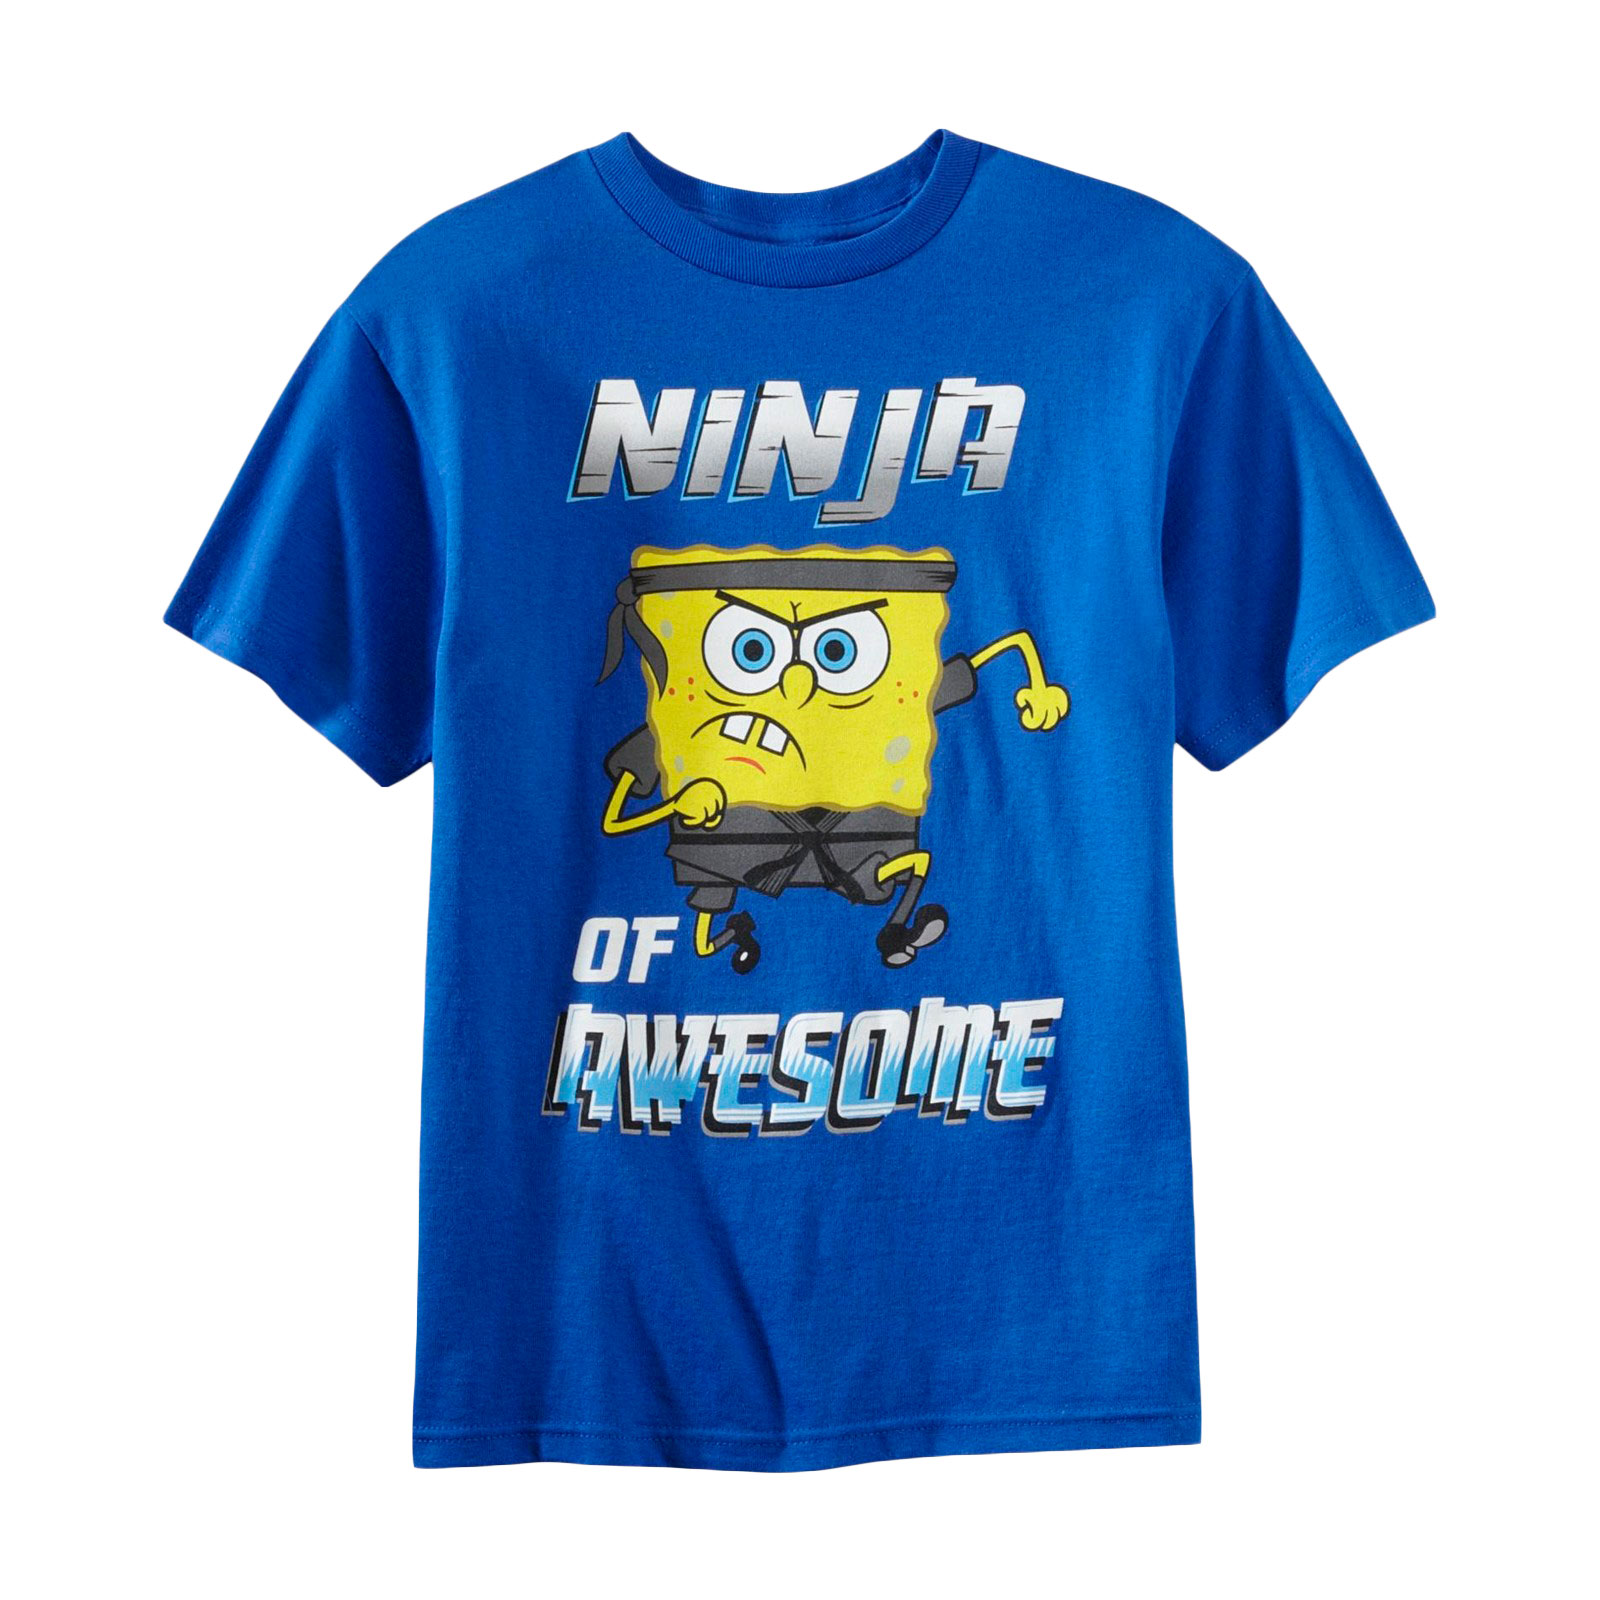 Nickelodeon SpongeBob SquarePants Boy's Graphic T-Shirt